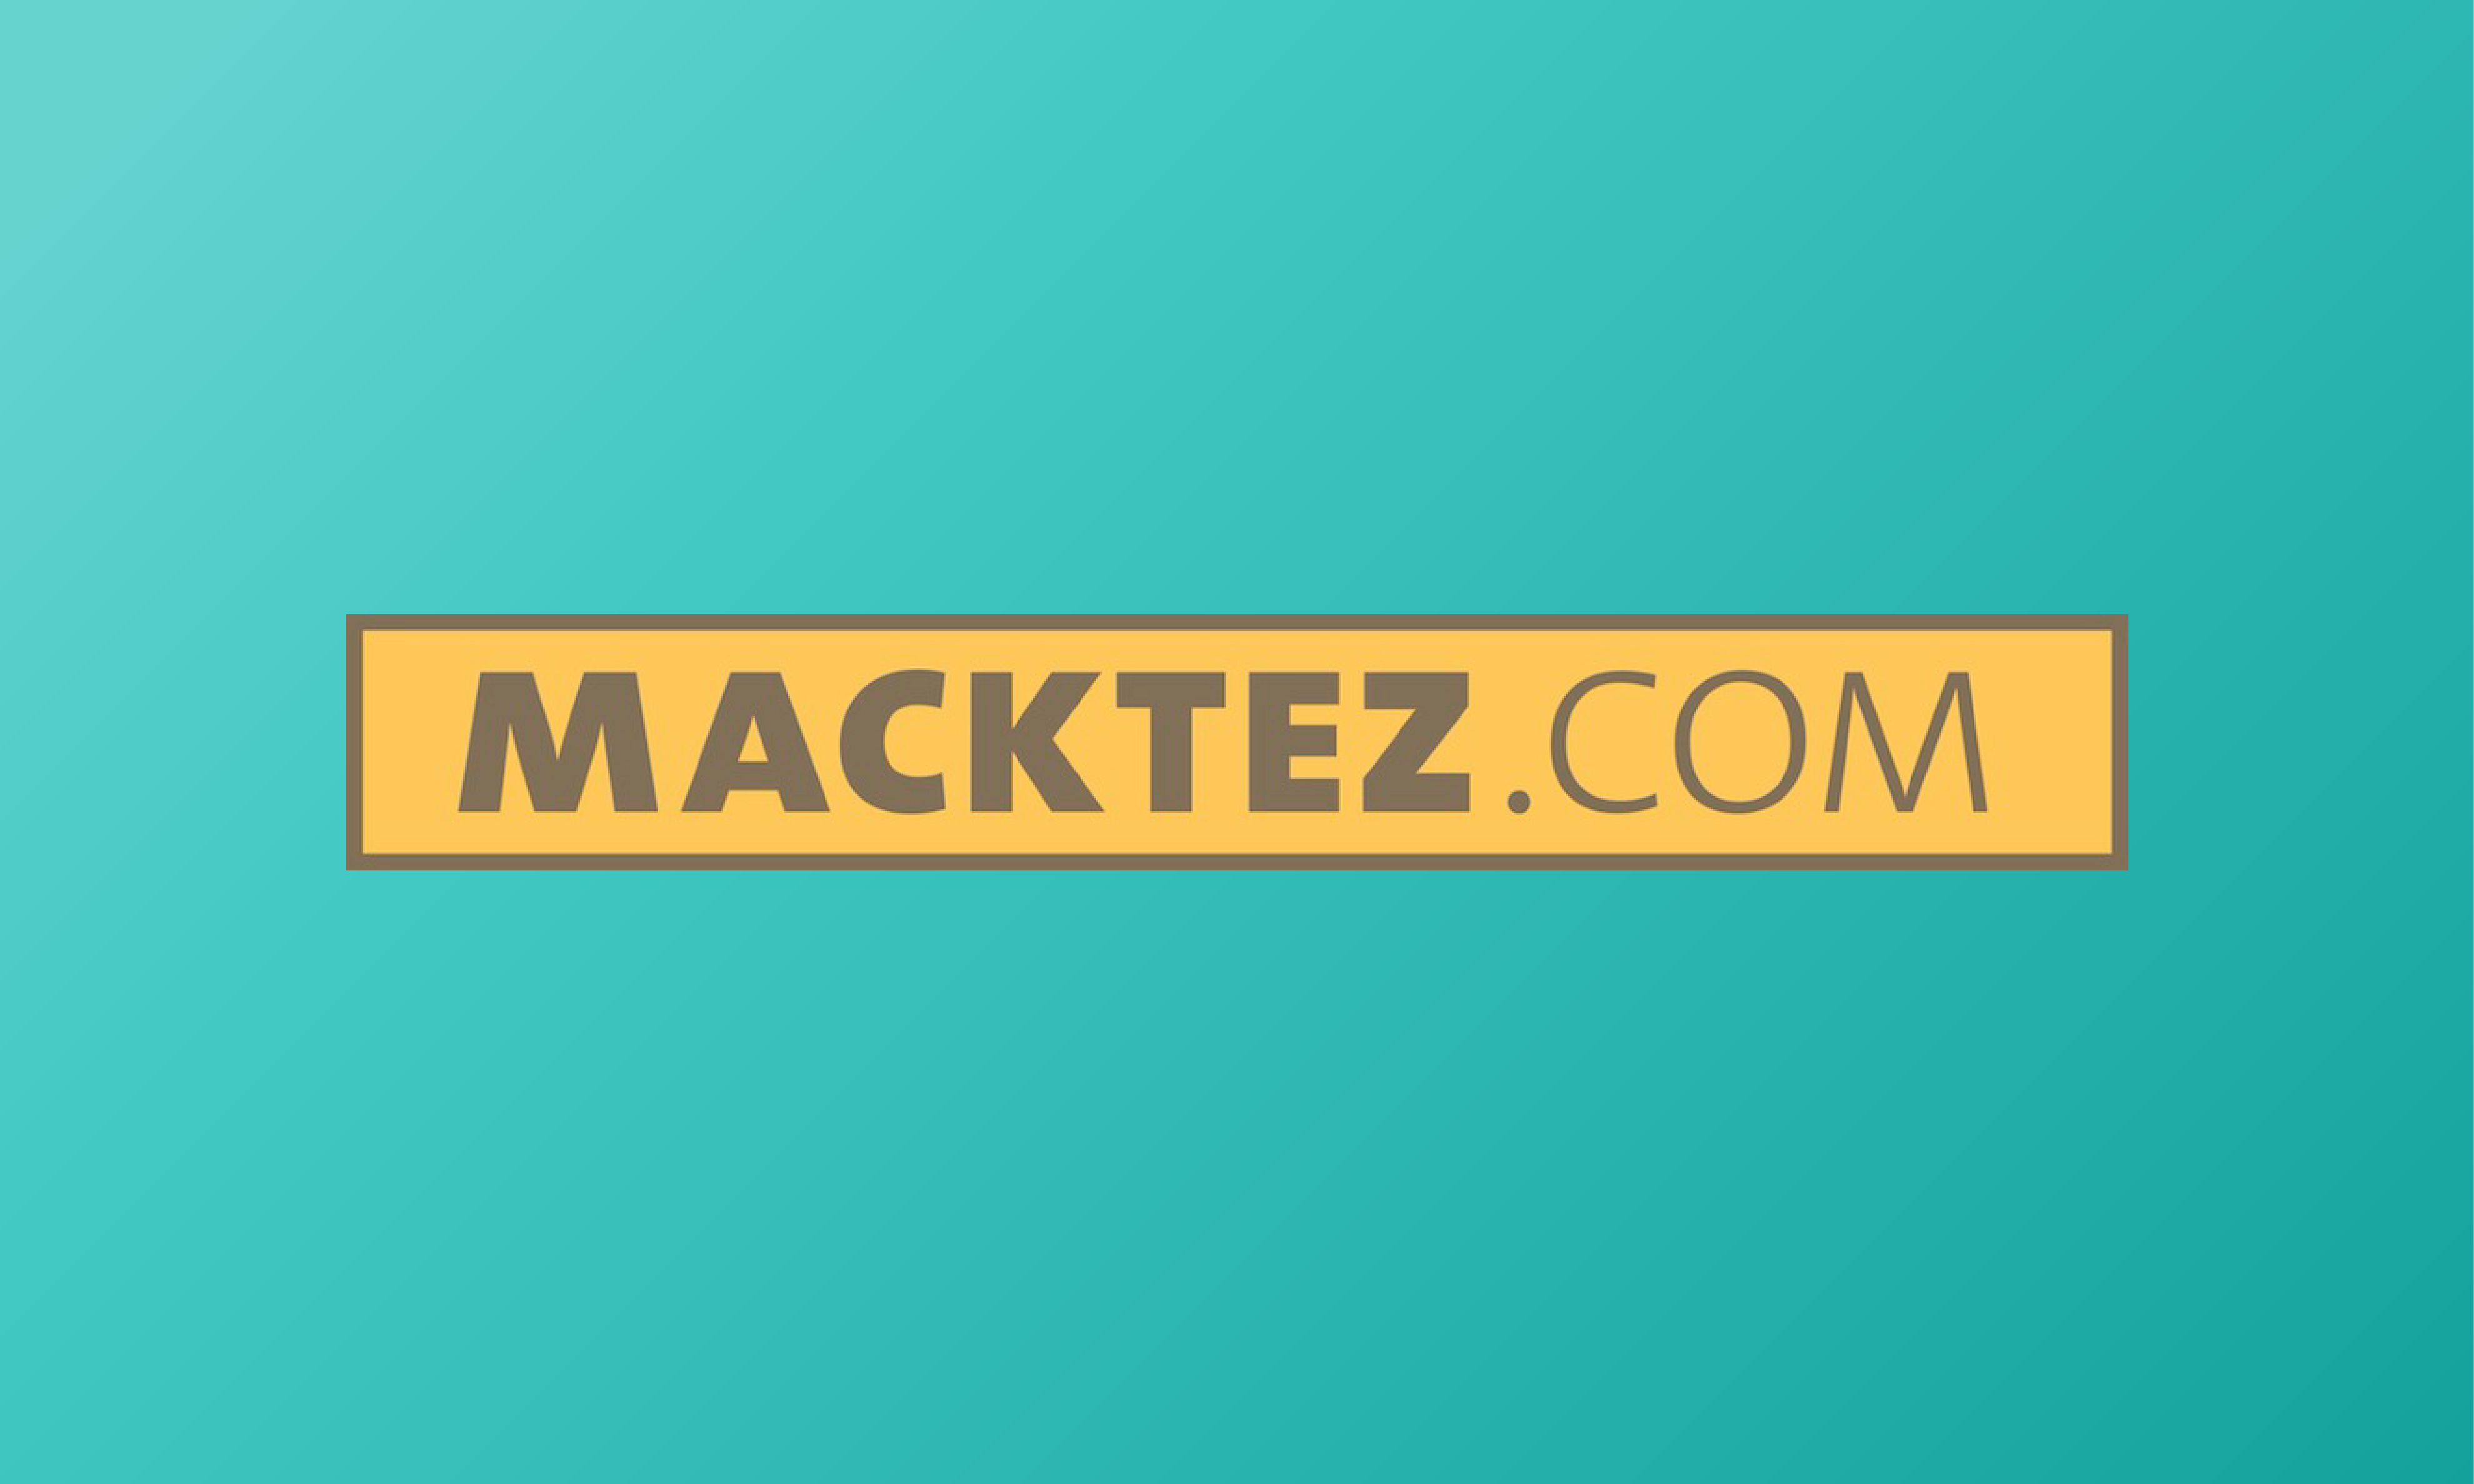 202201-CS-Resource-Macktez-1900x1140-1